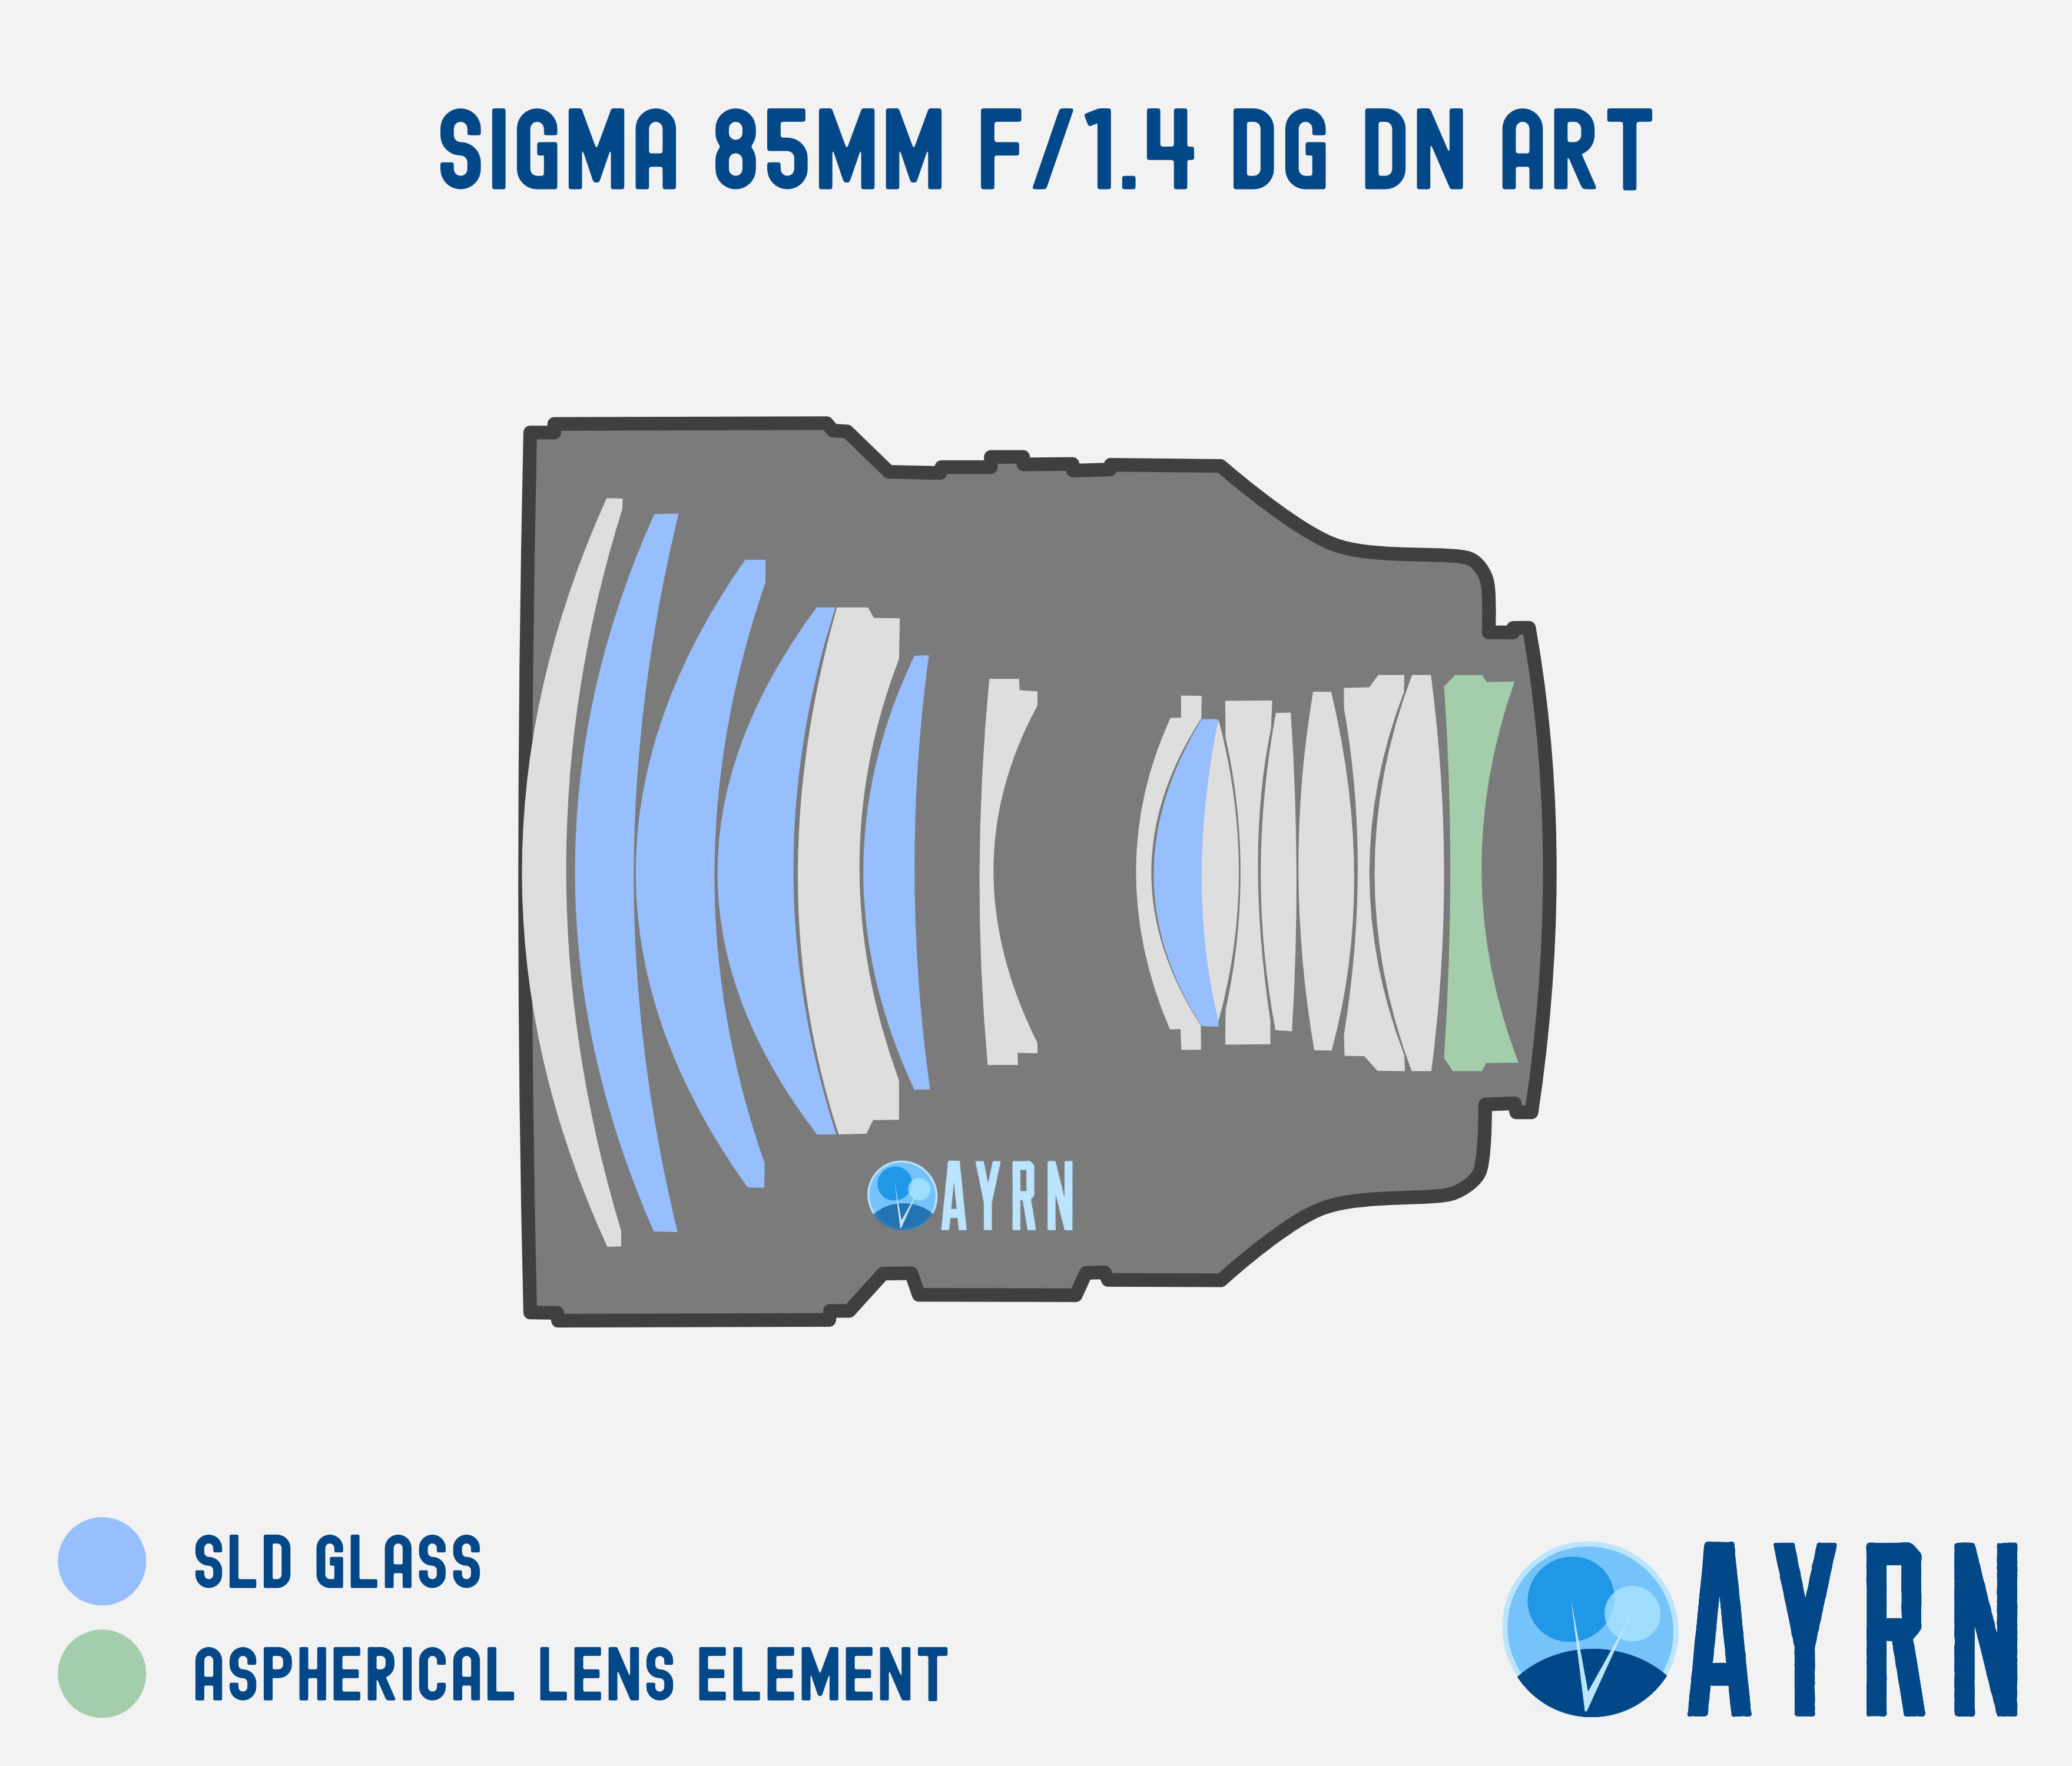 SIGMA 85MM F/1.4 DG DN ART LENS DESIGN / OPTICAL CONSTRUCTION